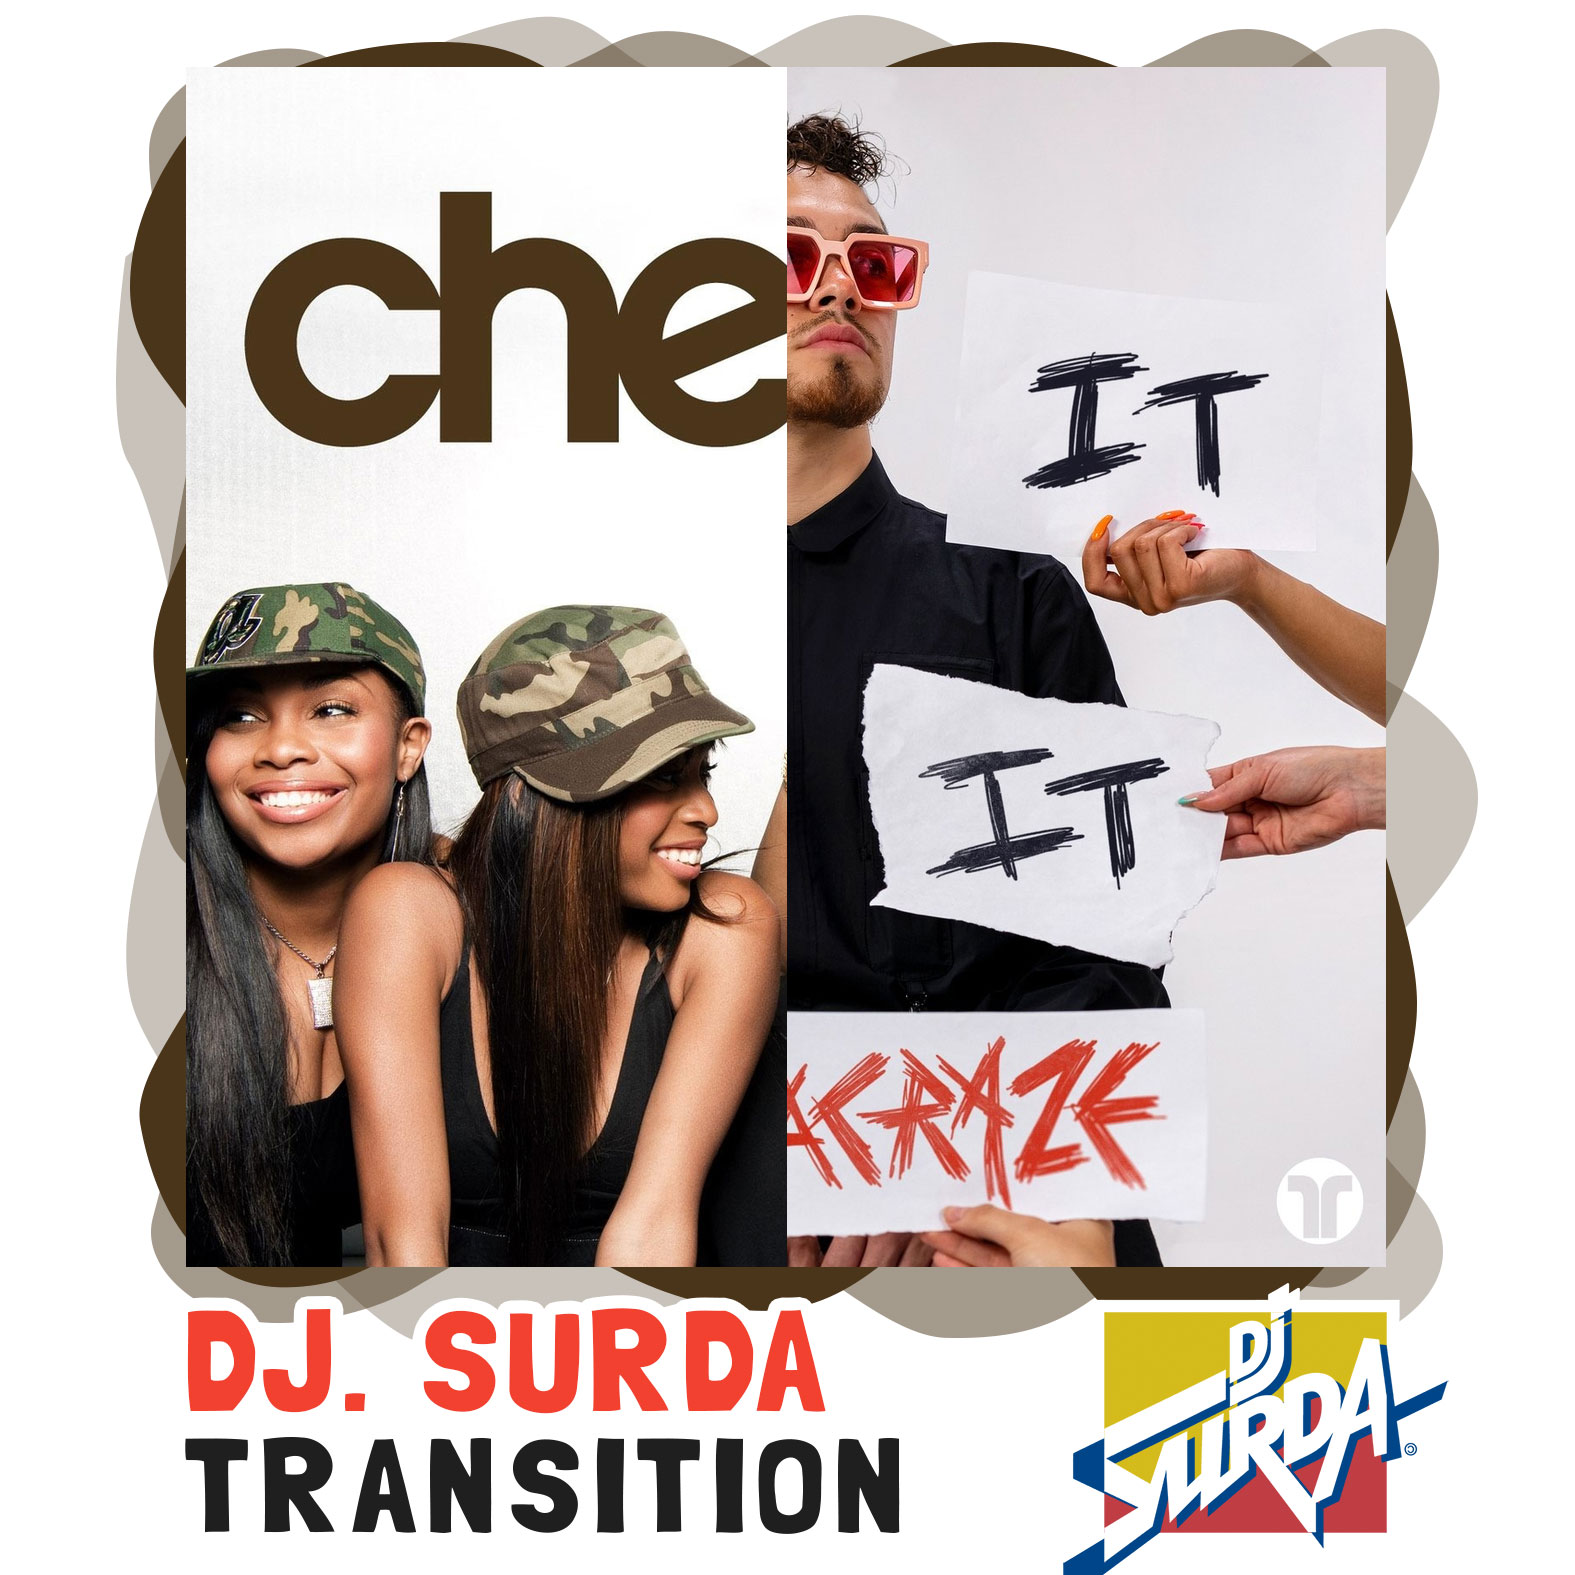 Cherish ft. Sean Paul – Do It To It (Dj. Surda House Transition Extended Edit)